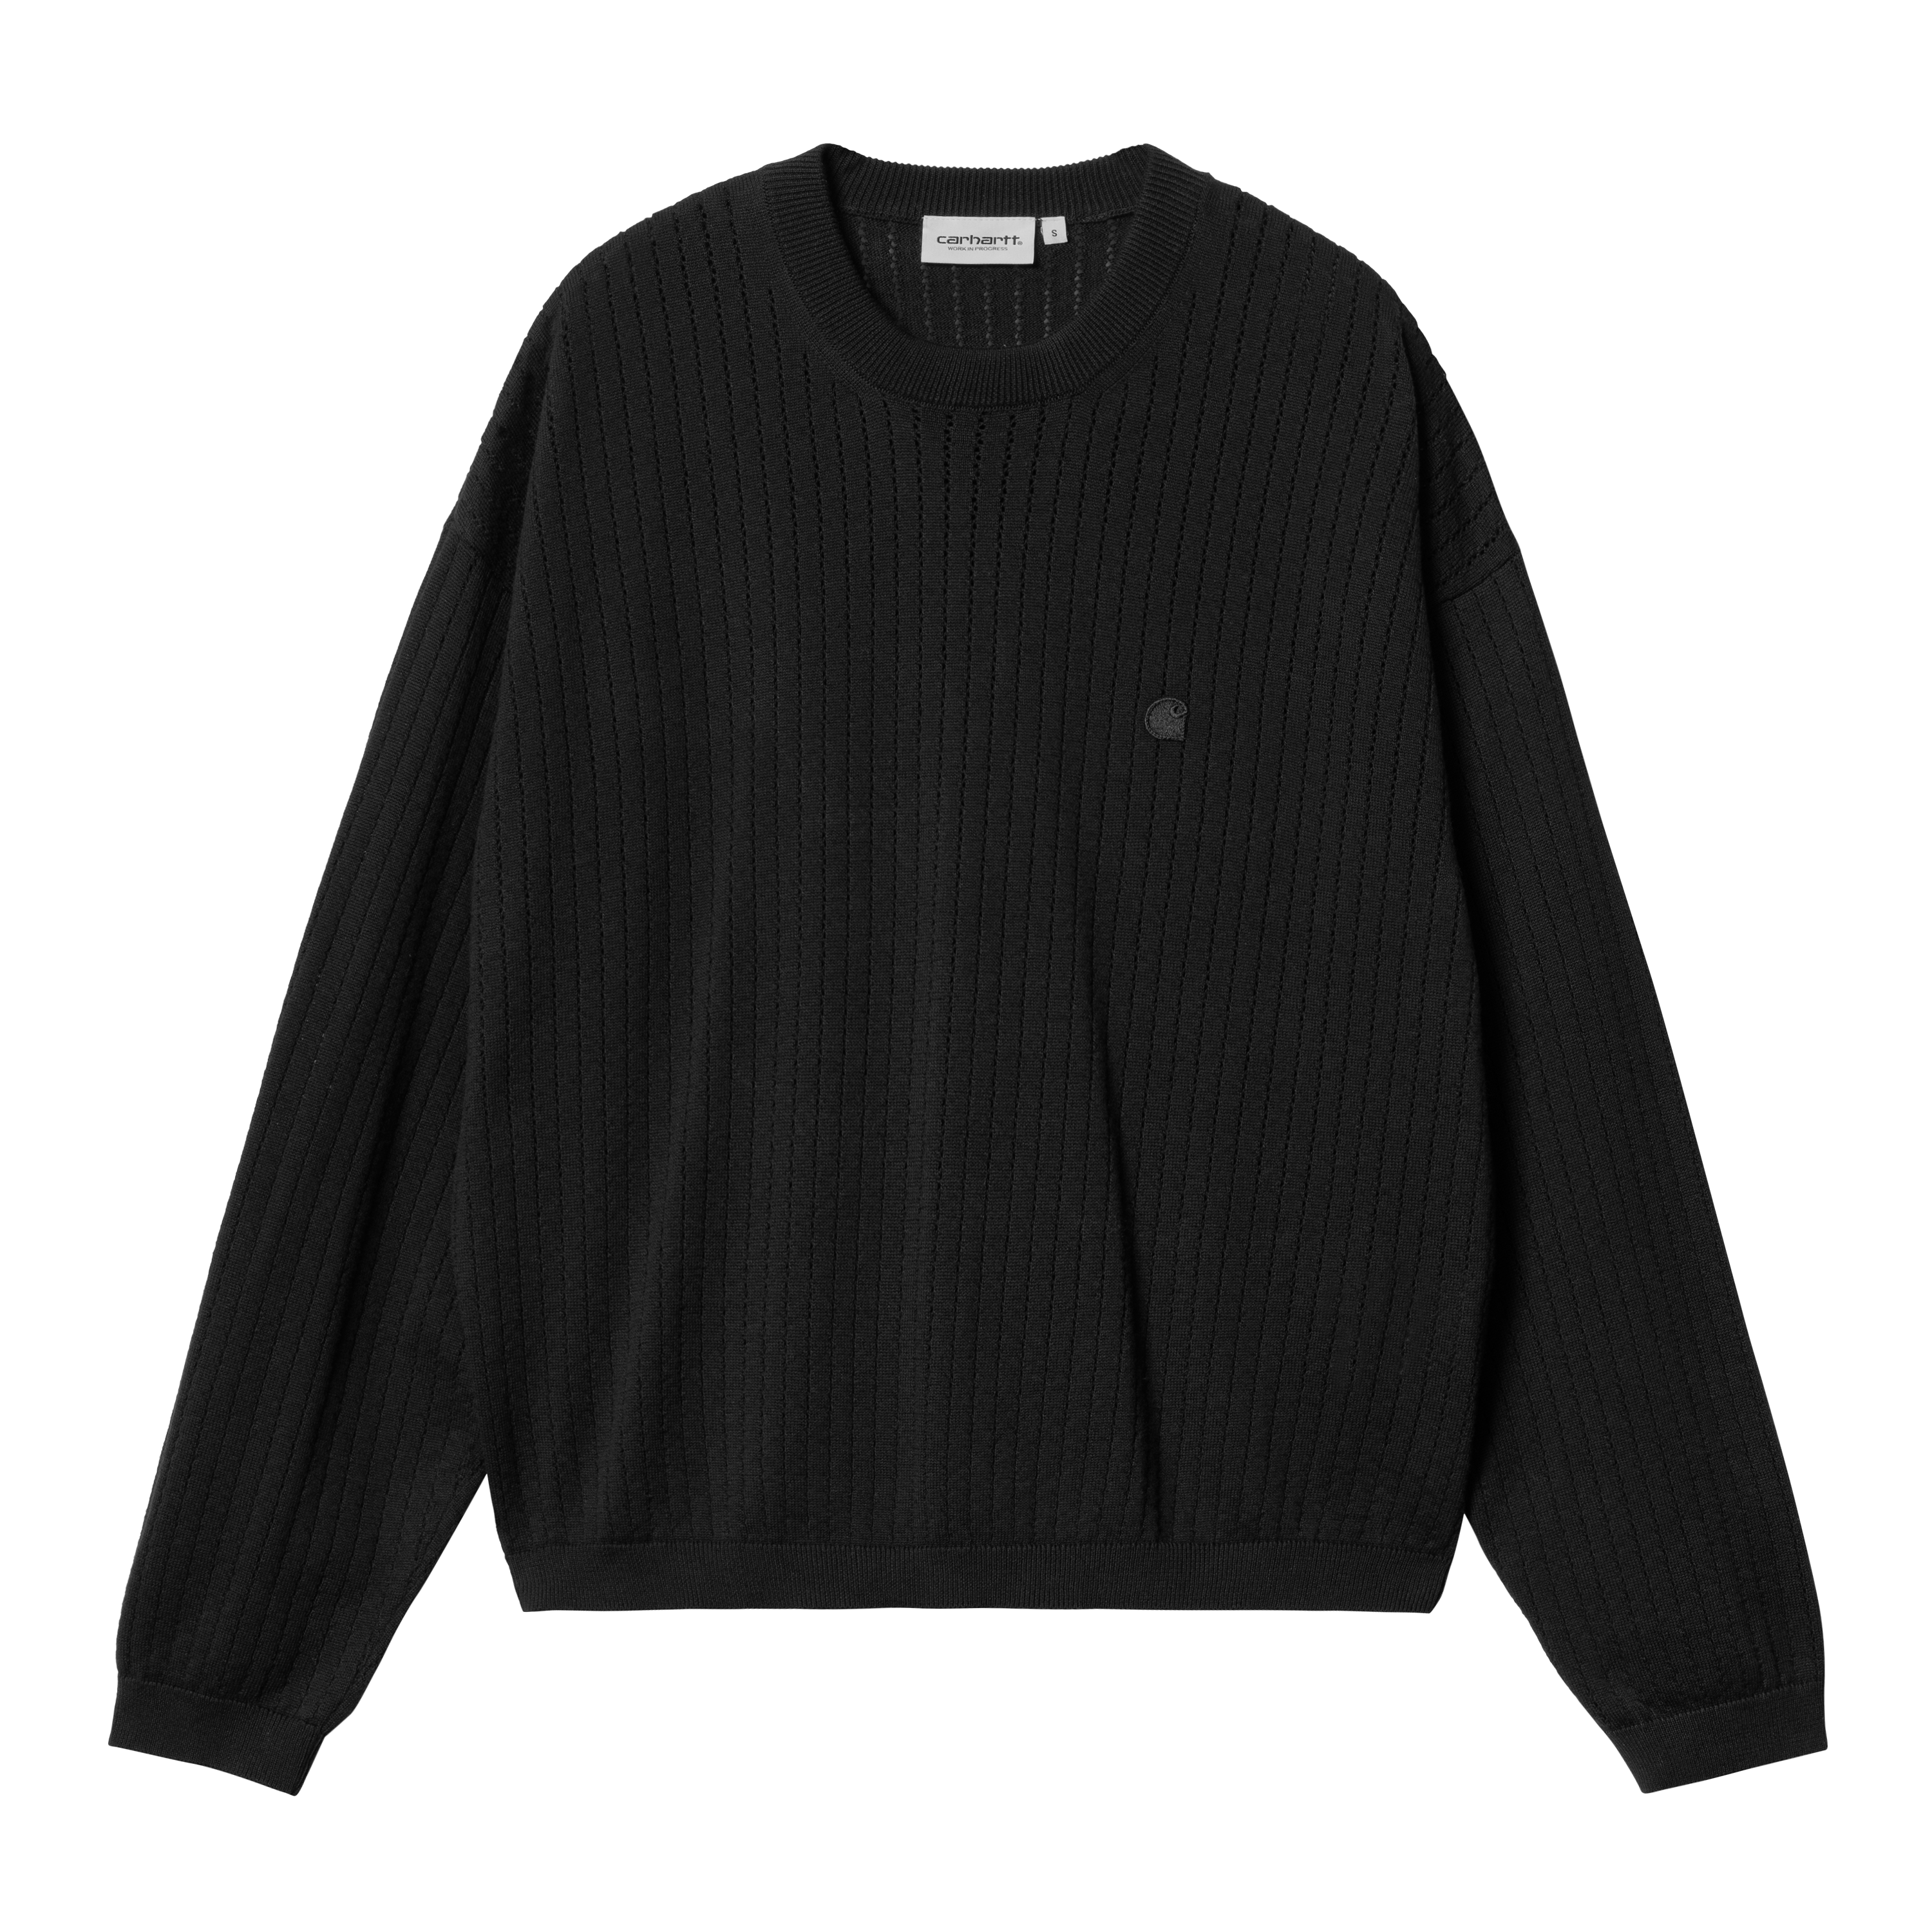 Carhartt WIP Women’s Norlina Sweater in Black